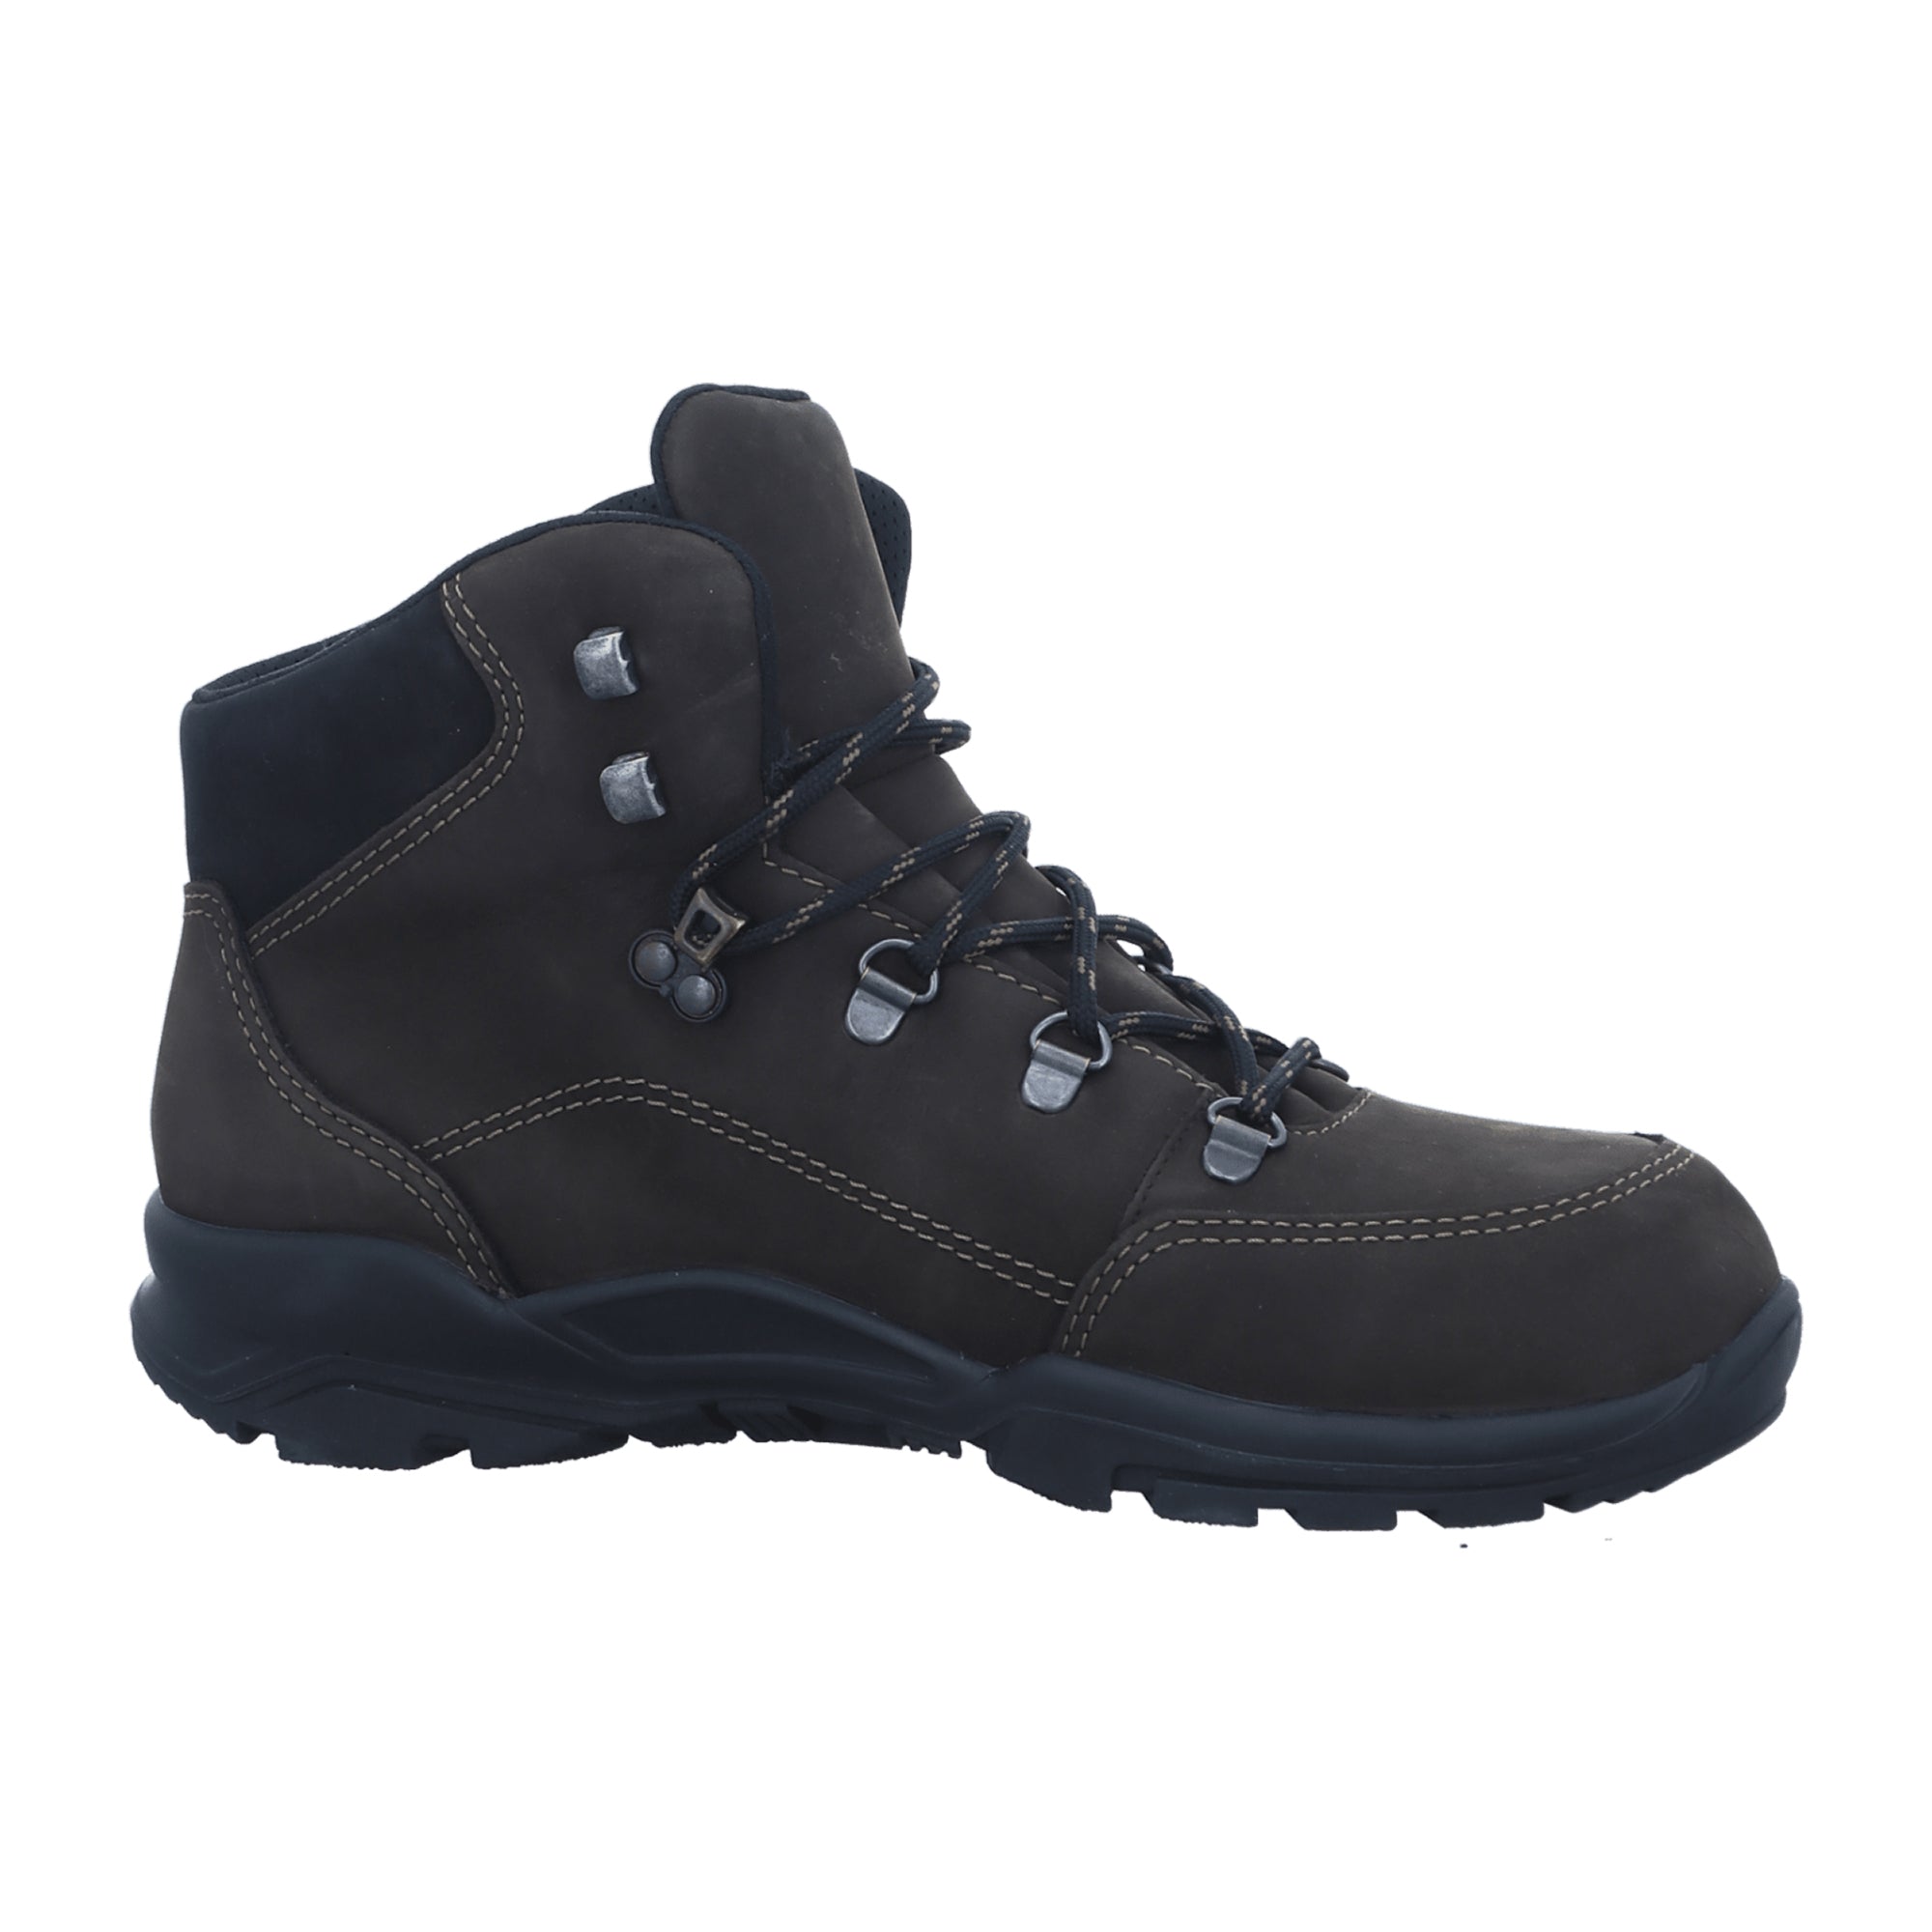 Finn Comfort Tibet Hiking Boots for Men - Durable Outdoor Footwear, Brown